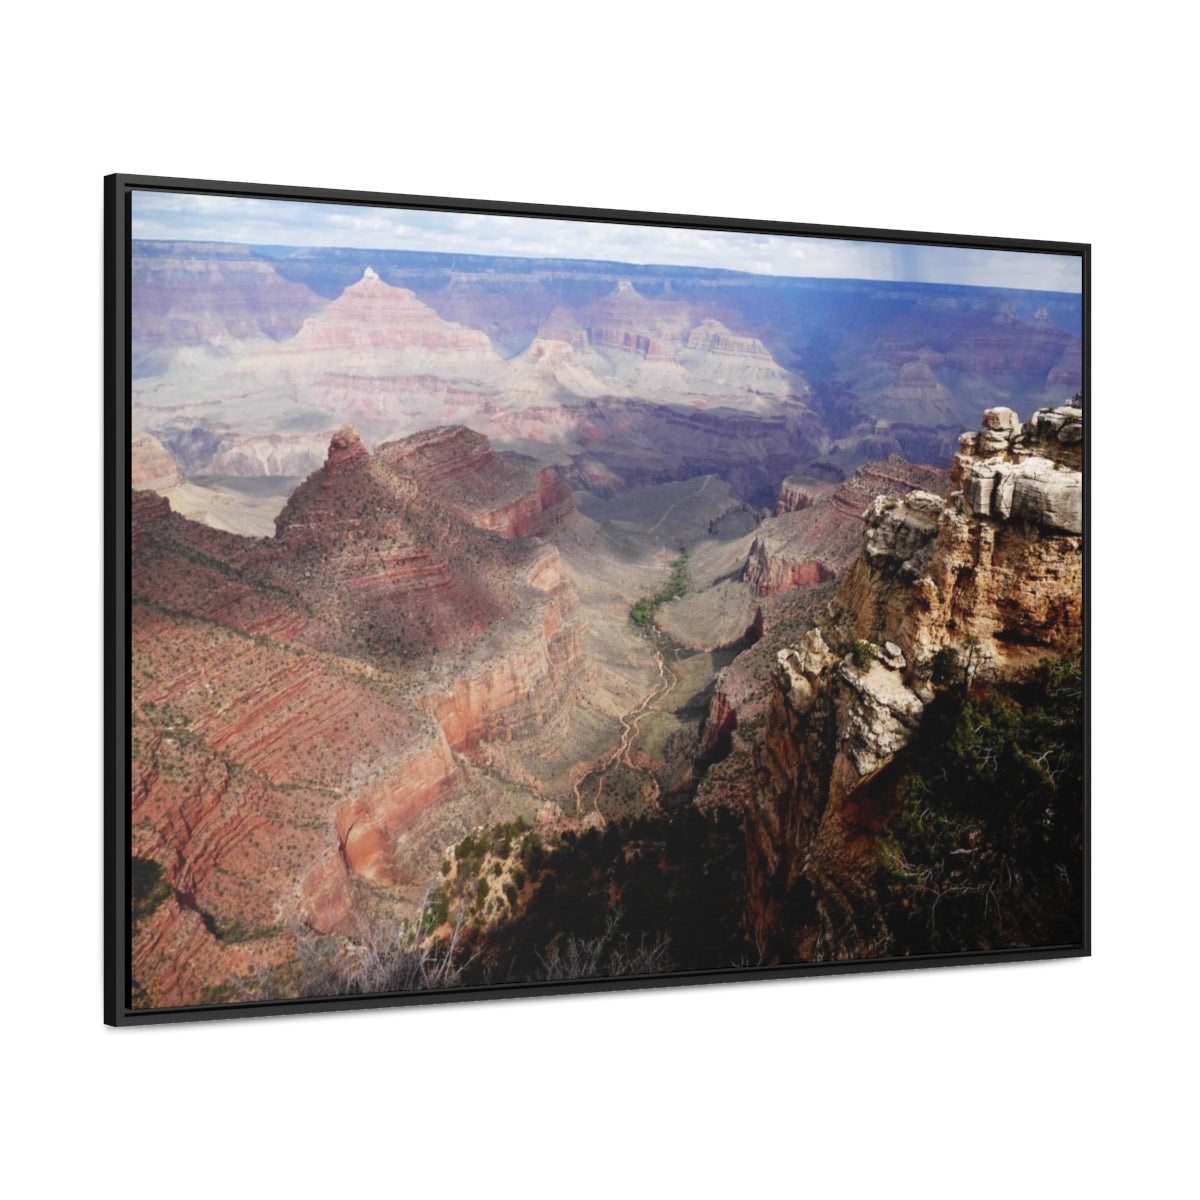 Grand Canyon Canvas Print